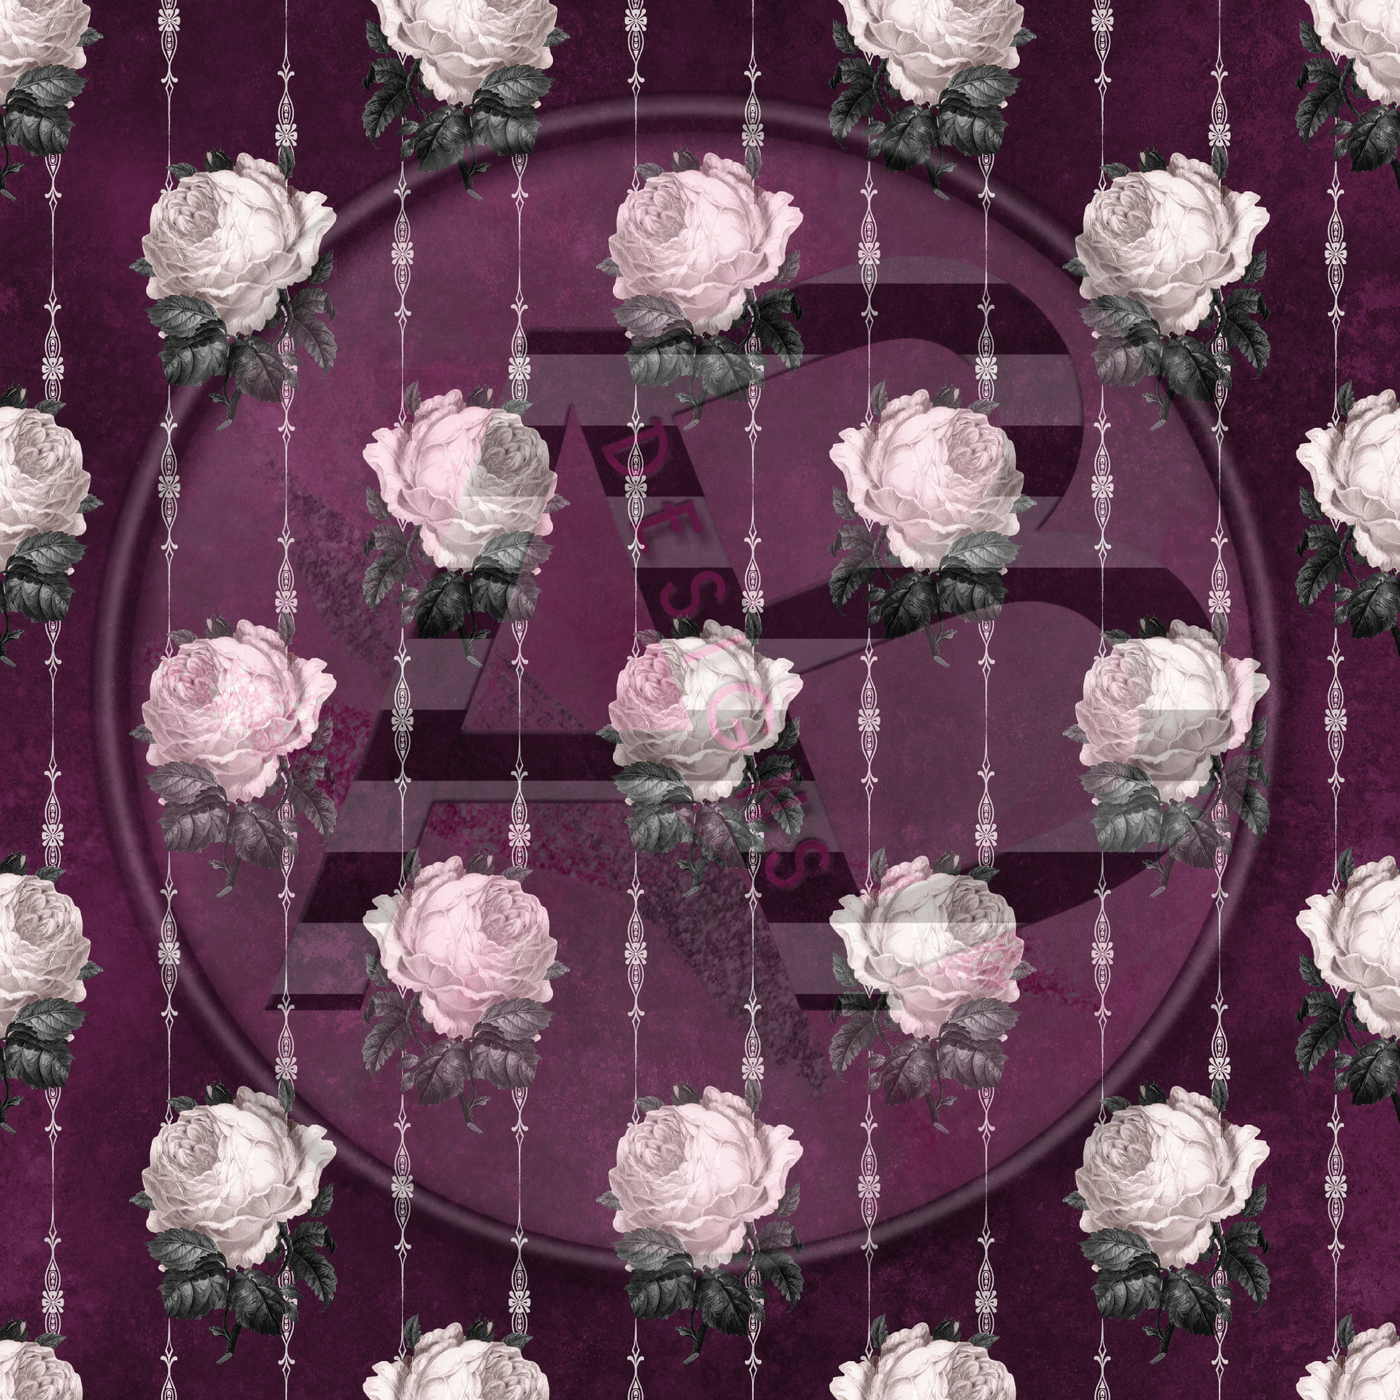 Adhesive Patterned Vinyl - Purple Roses 01